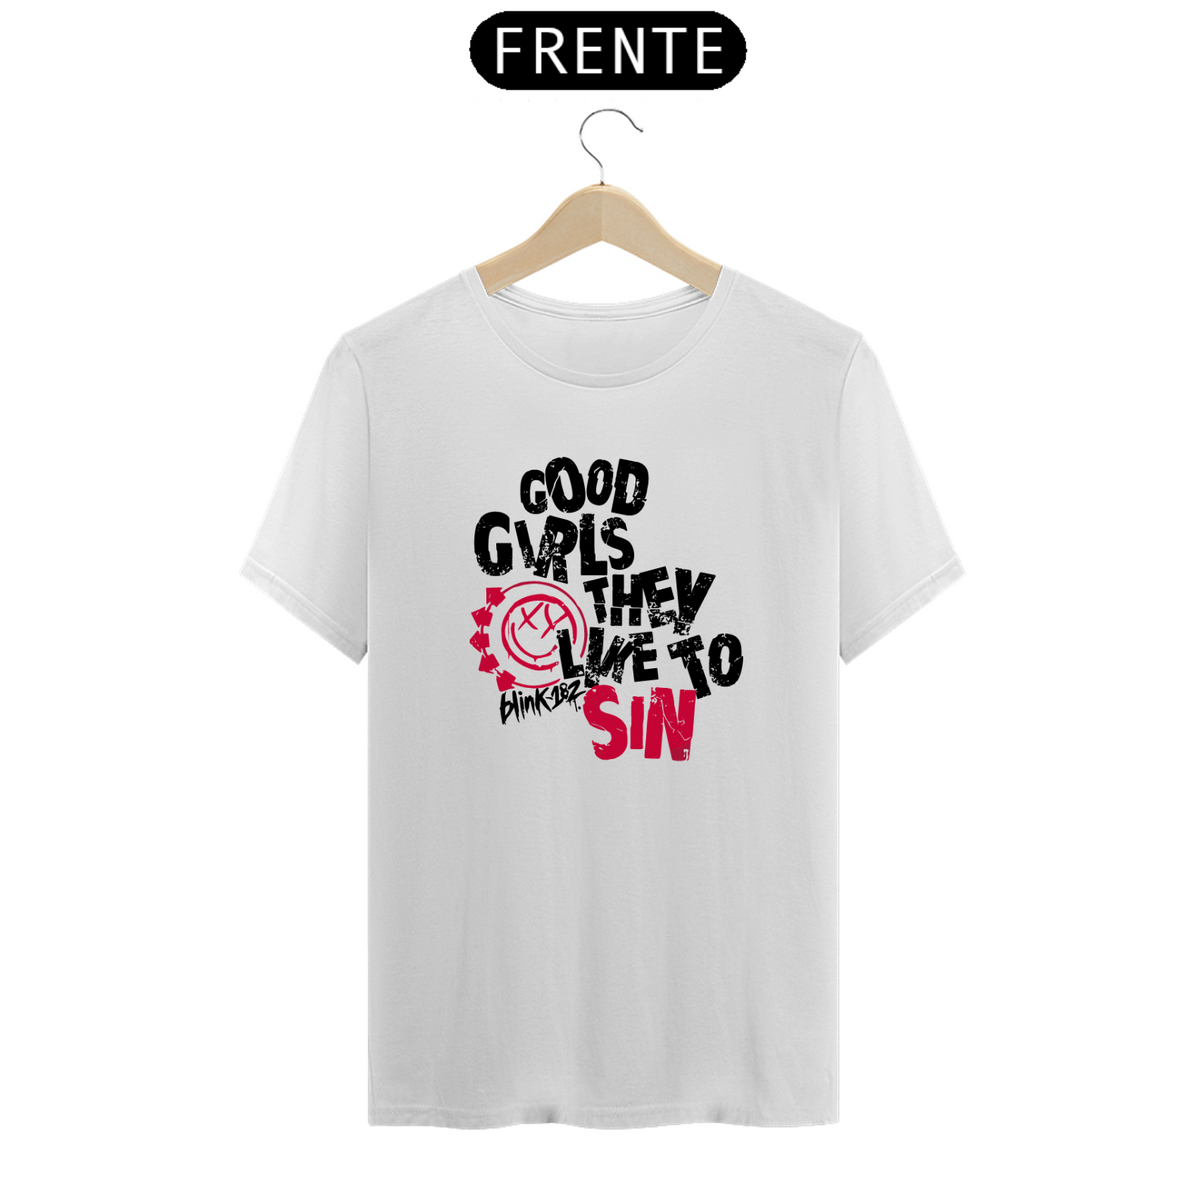 Nome do produto: Camiseta Unissex - Blink 182 Good Girls They Like To Sin